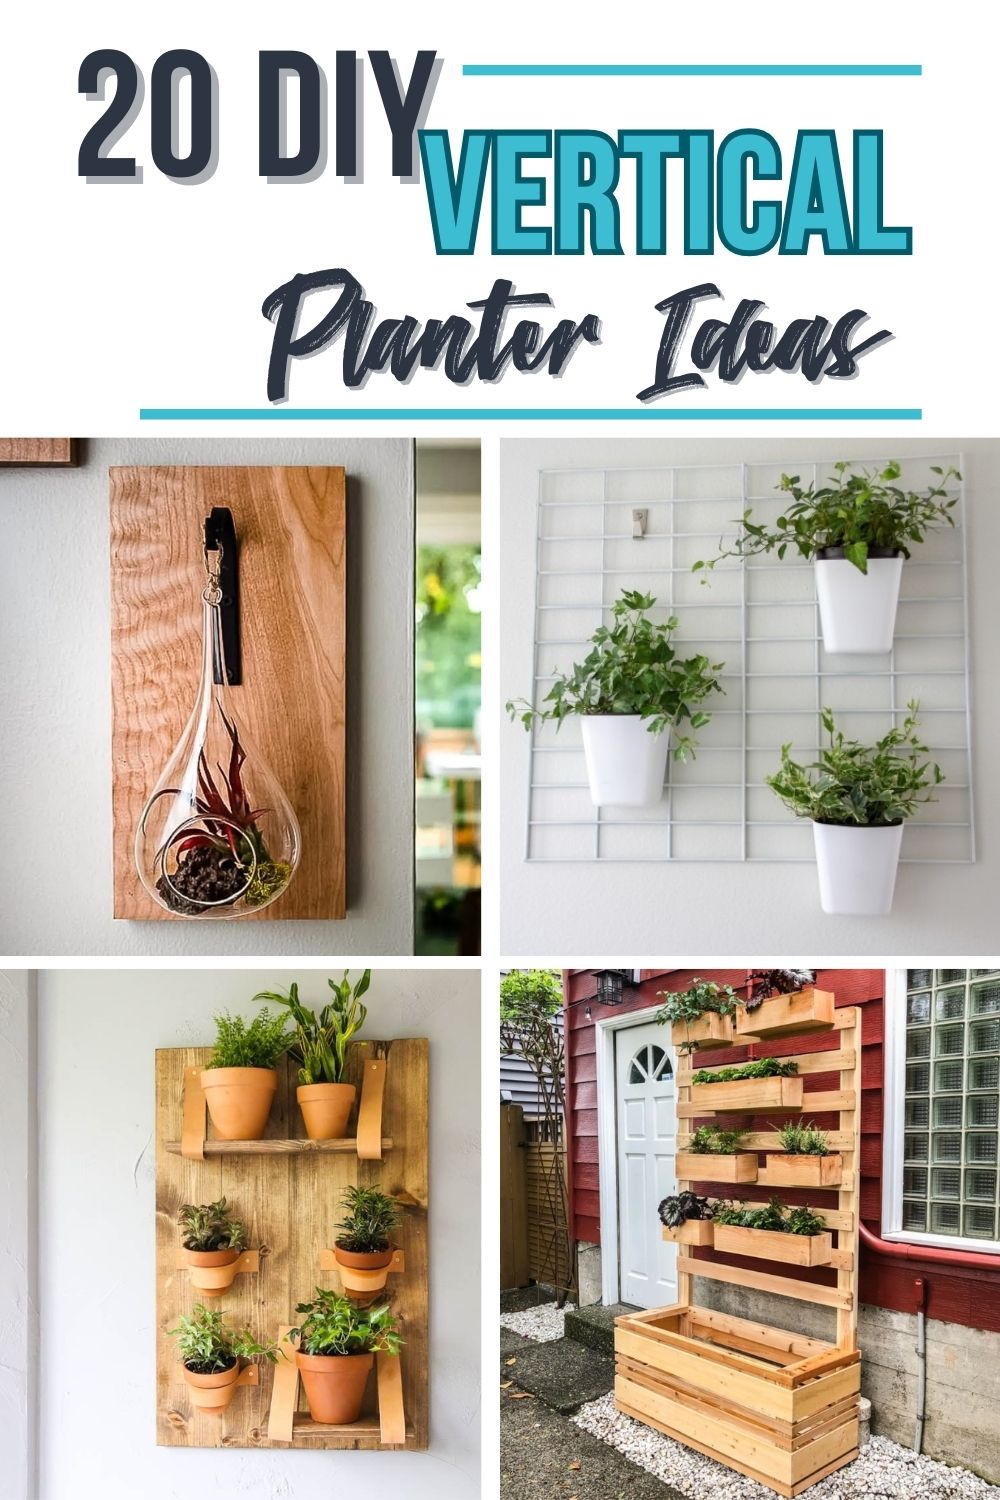 20 DIY Vertical Planter Ideas